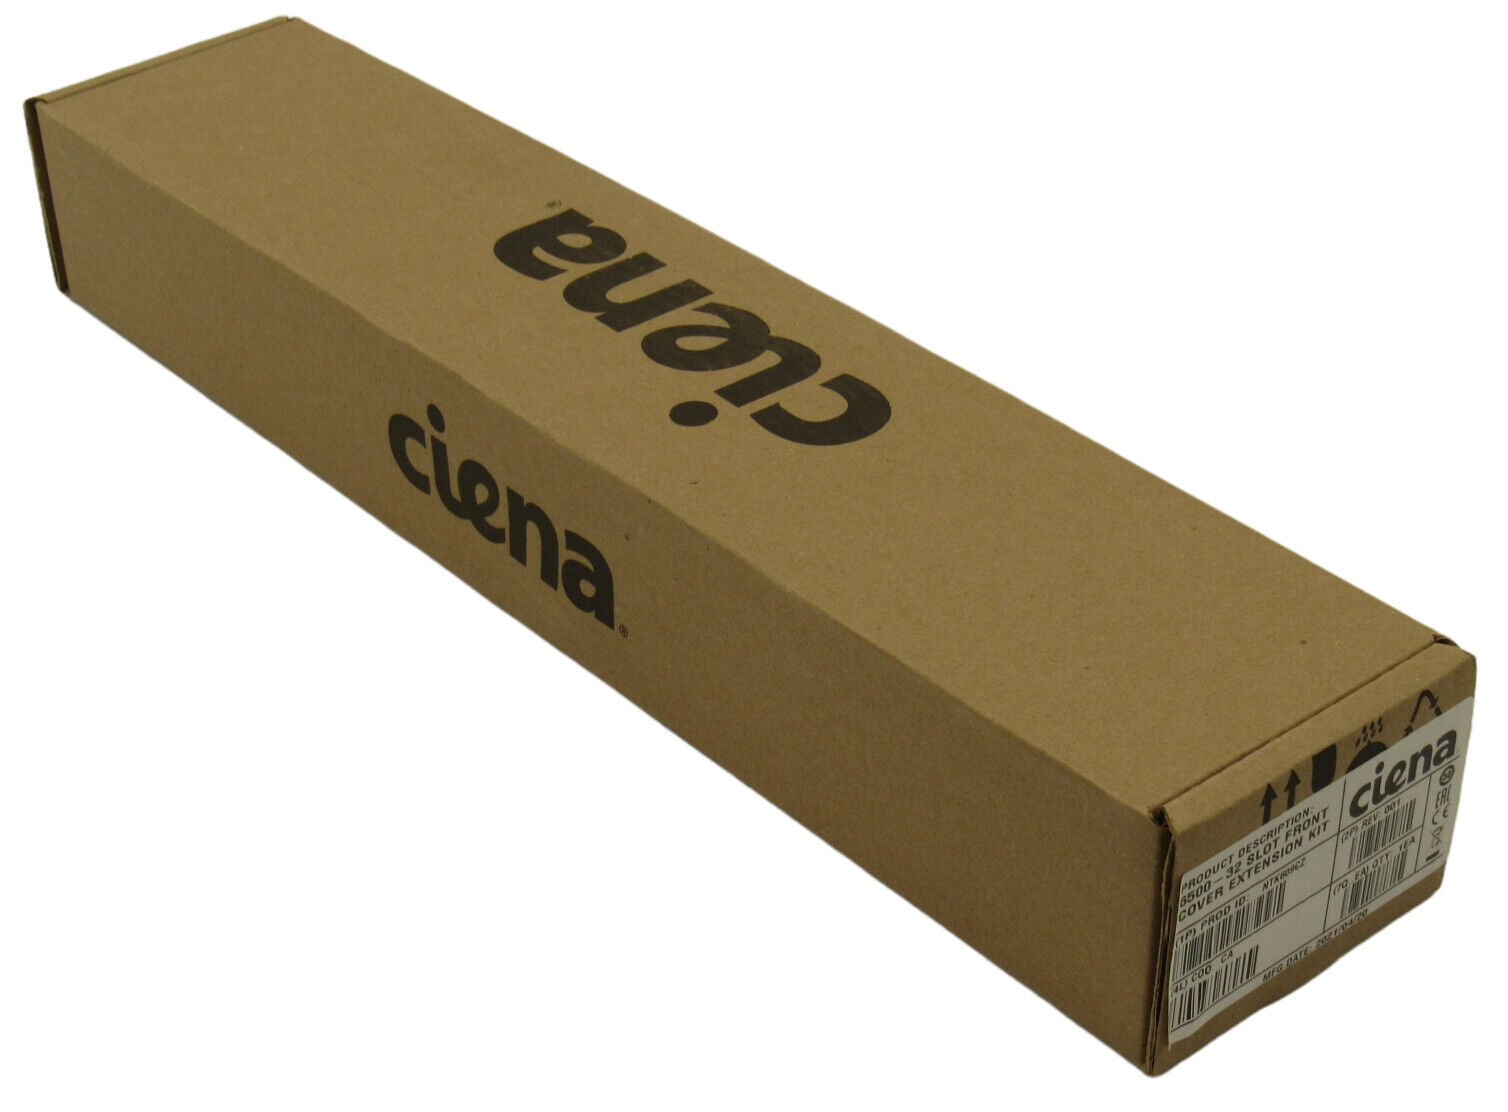 BRAND NEW Ciena NTK609CZ 32 Slot Front Cover Extension Kit for 6500 Platform